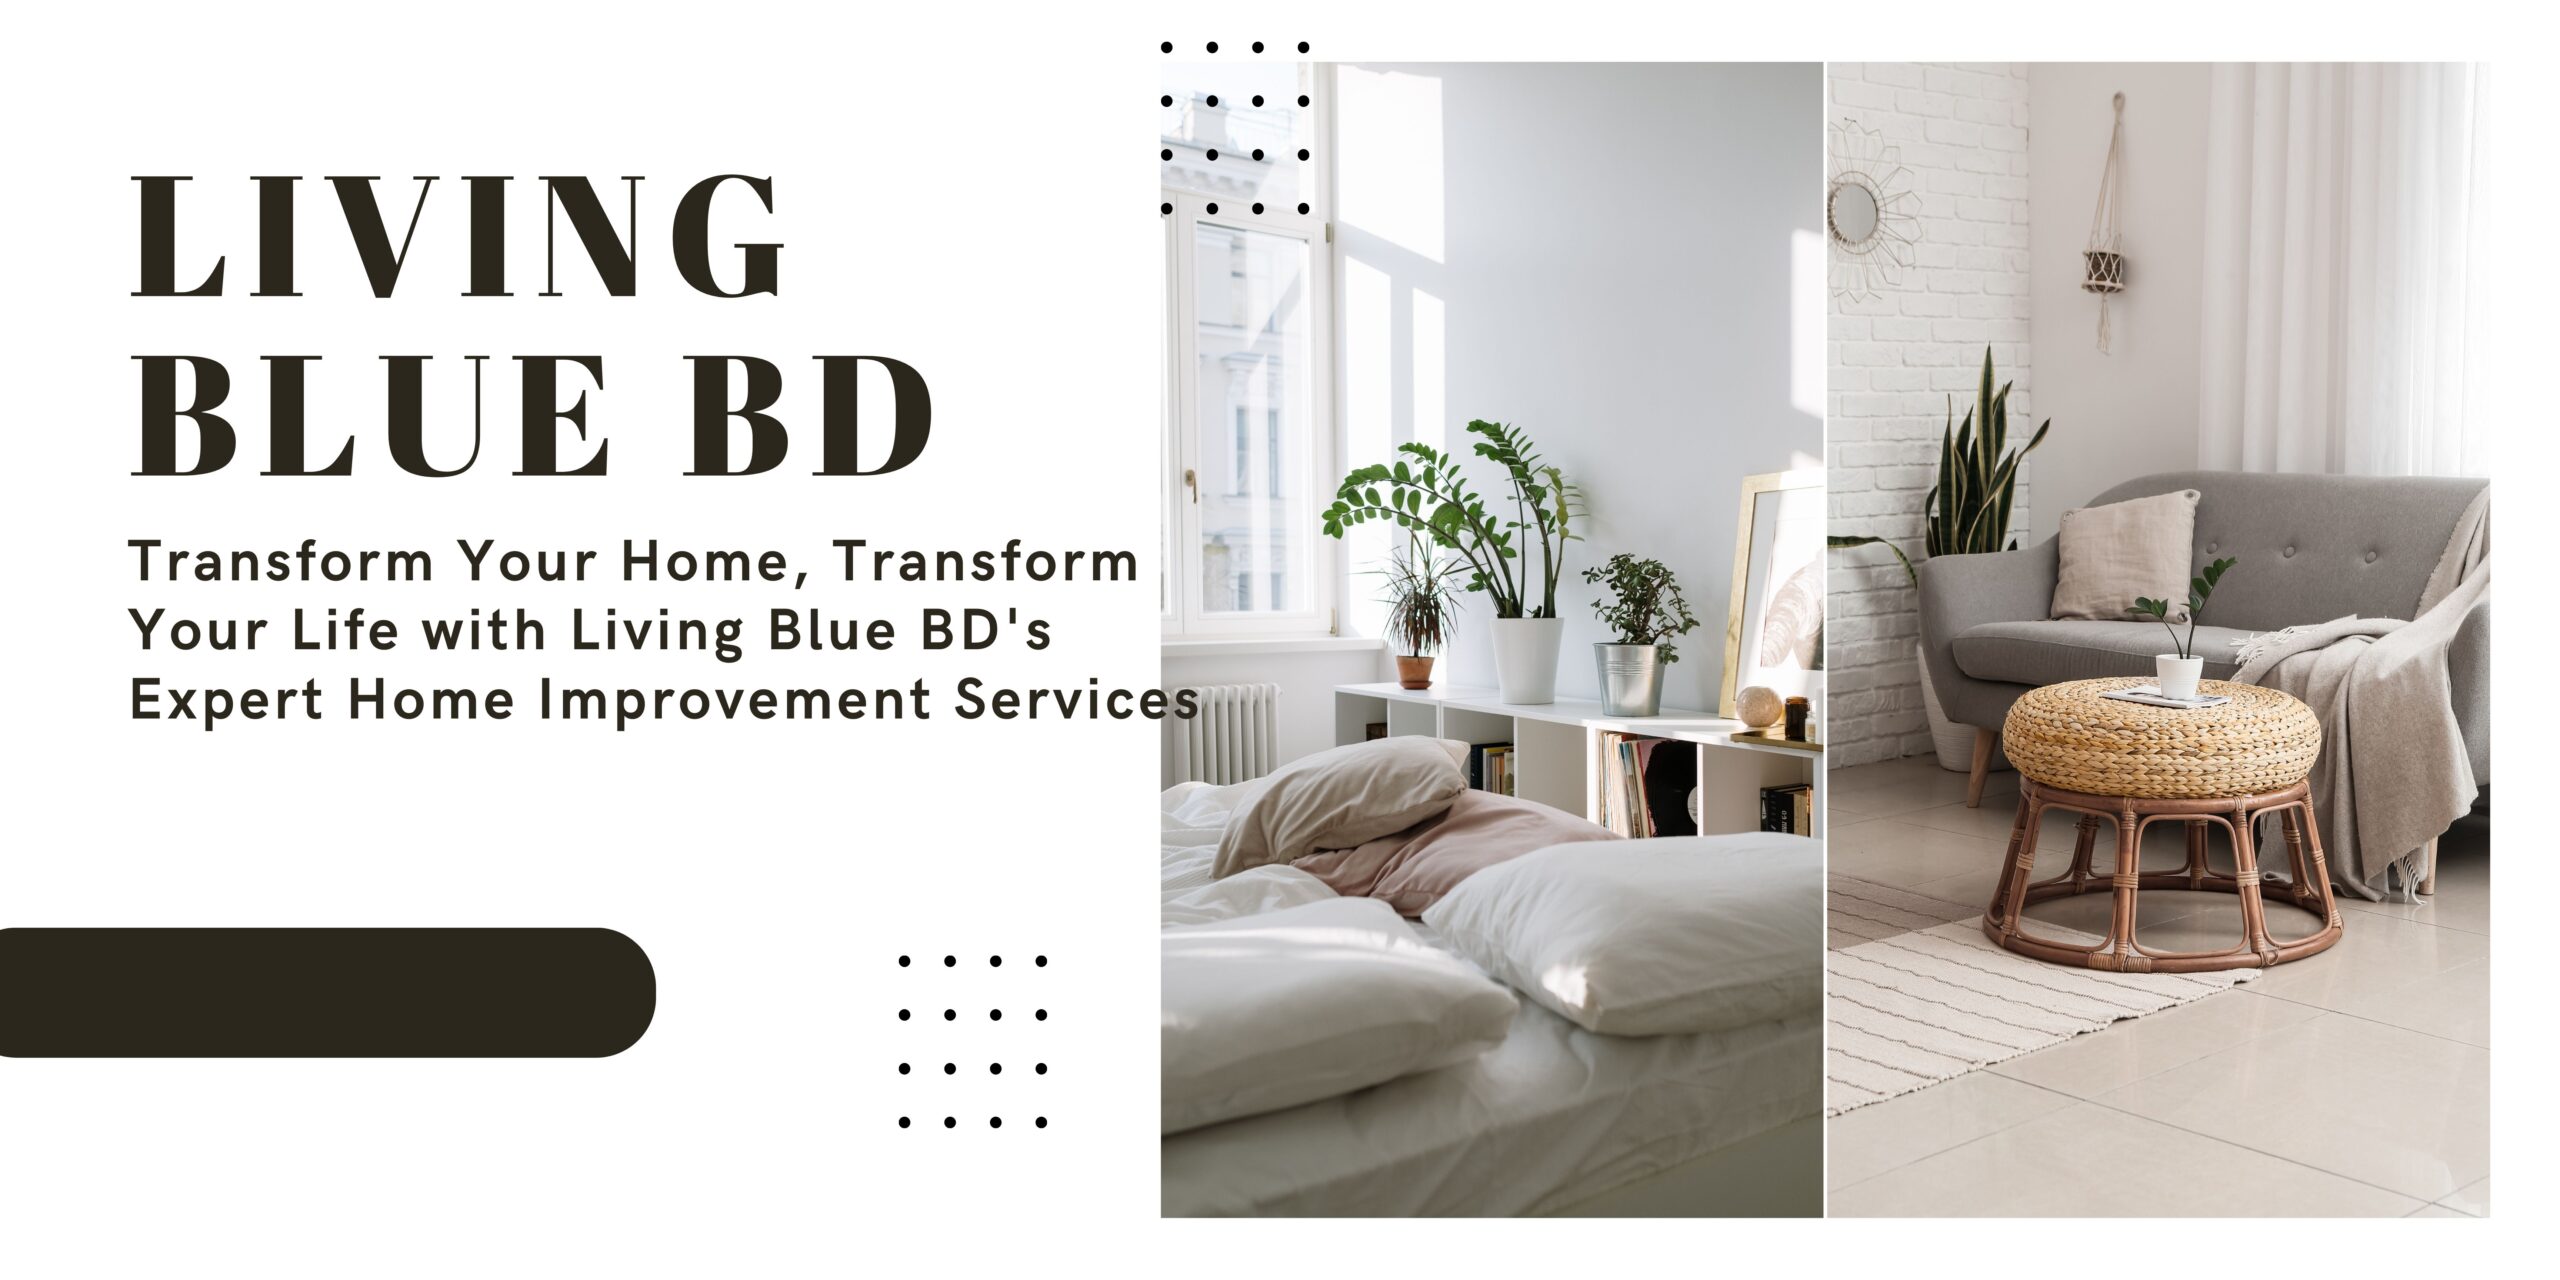 Living Blue BD: Home Improvement